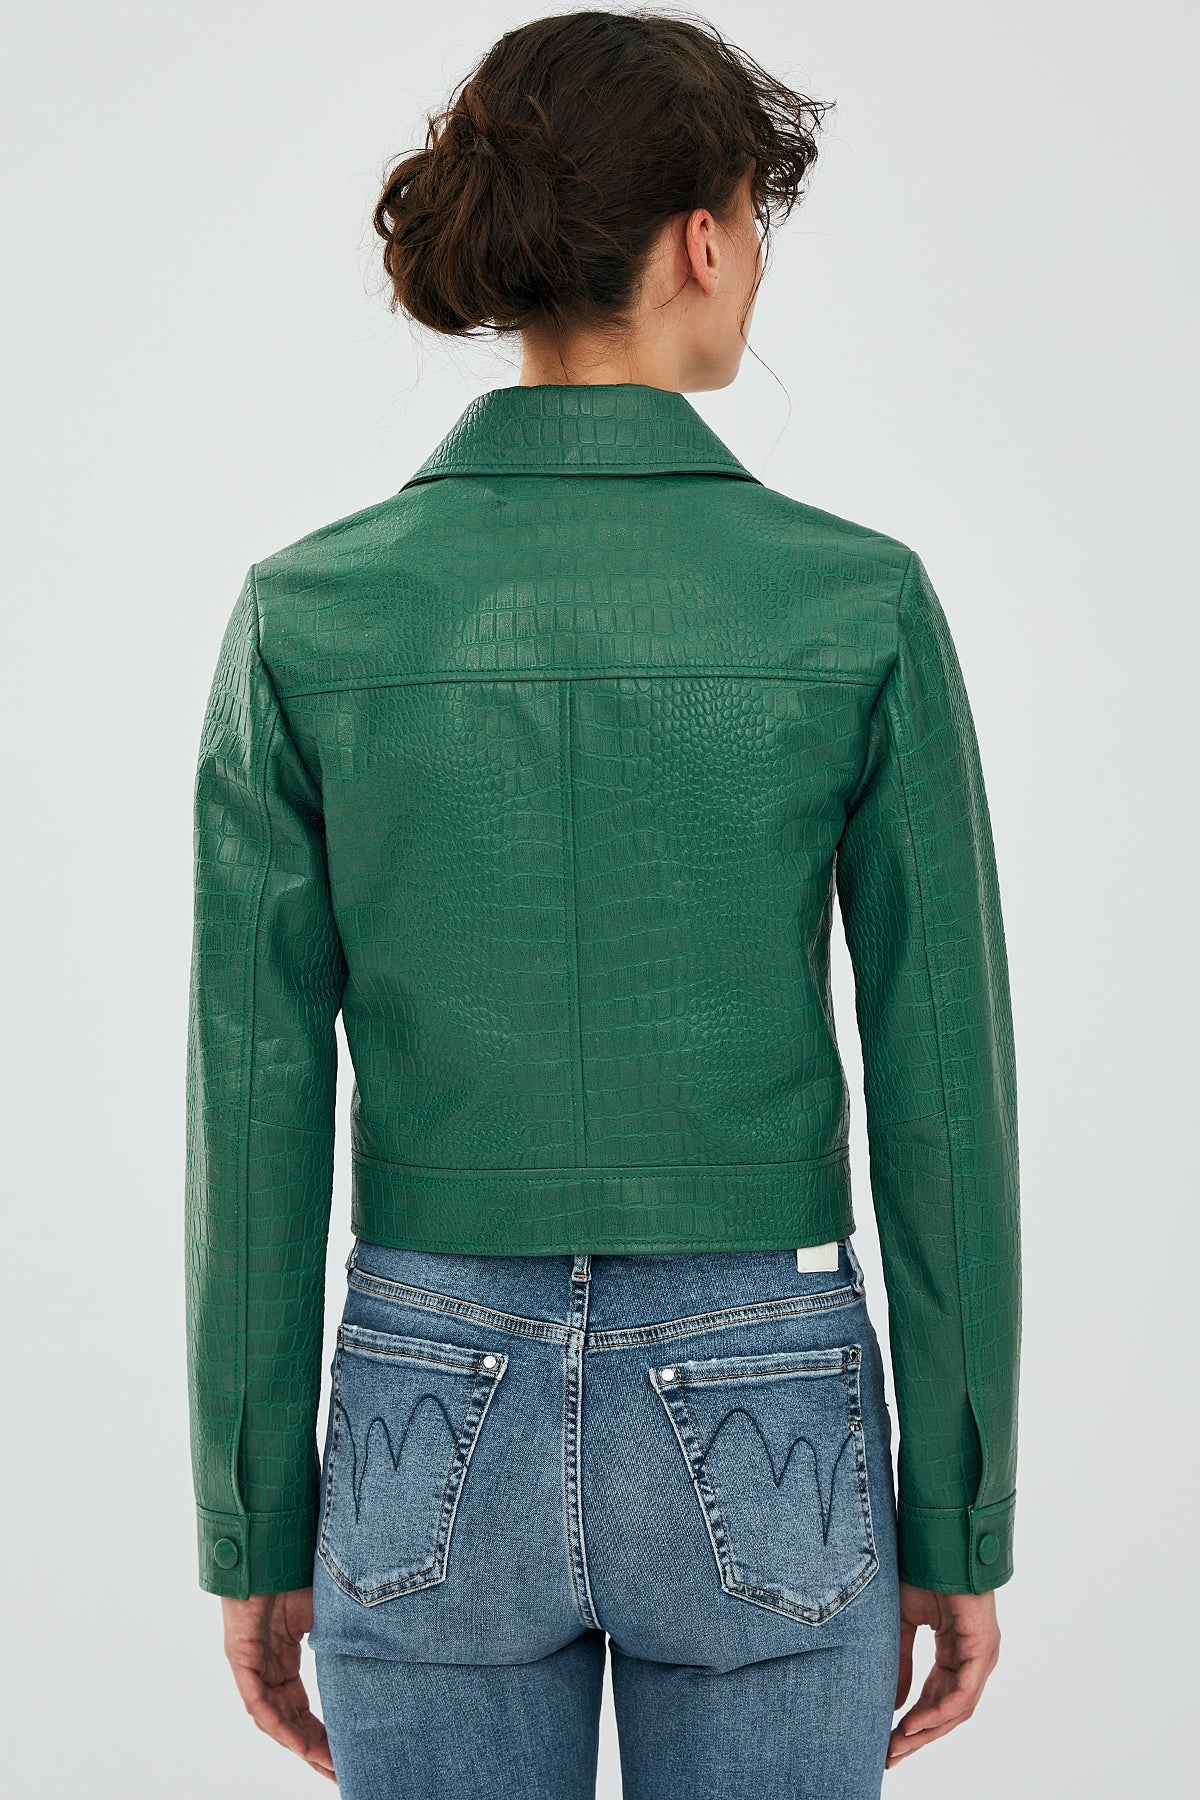 Tina Women's Green Short Leather Jacket